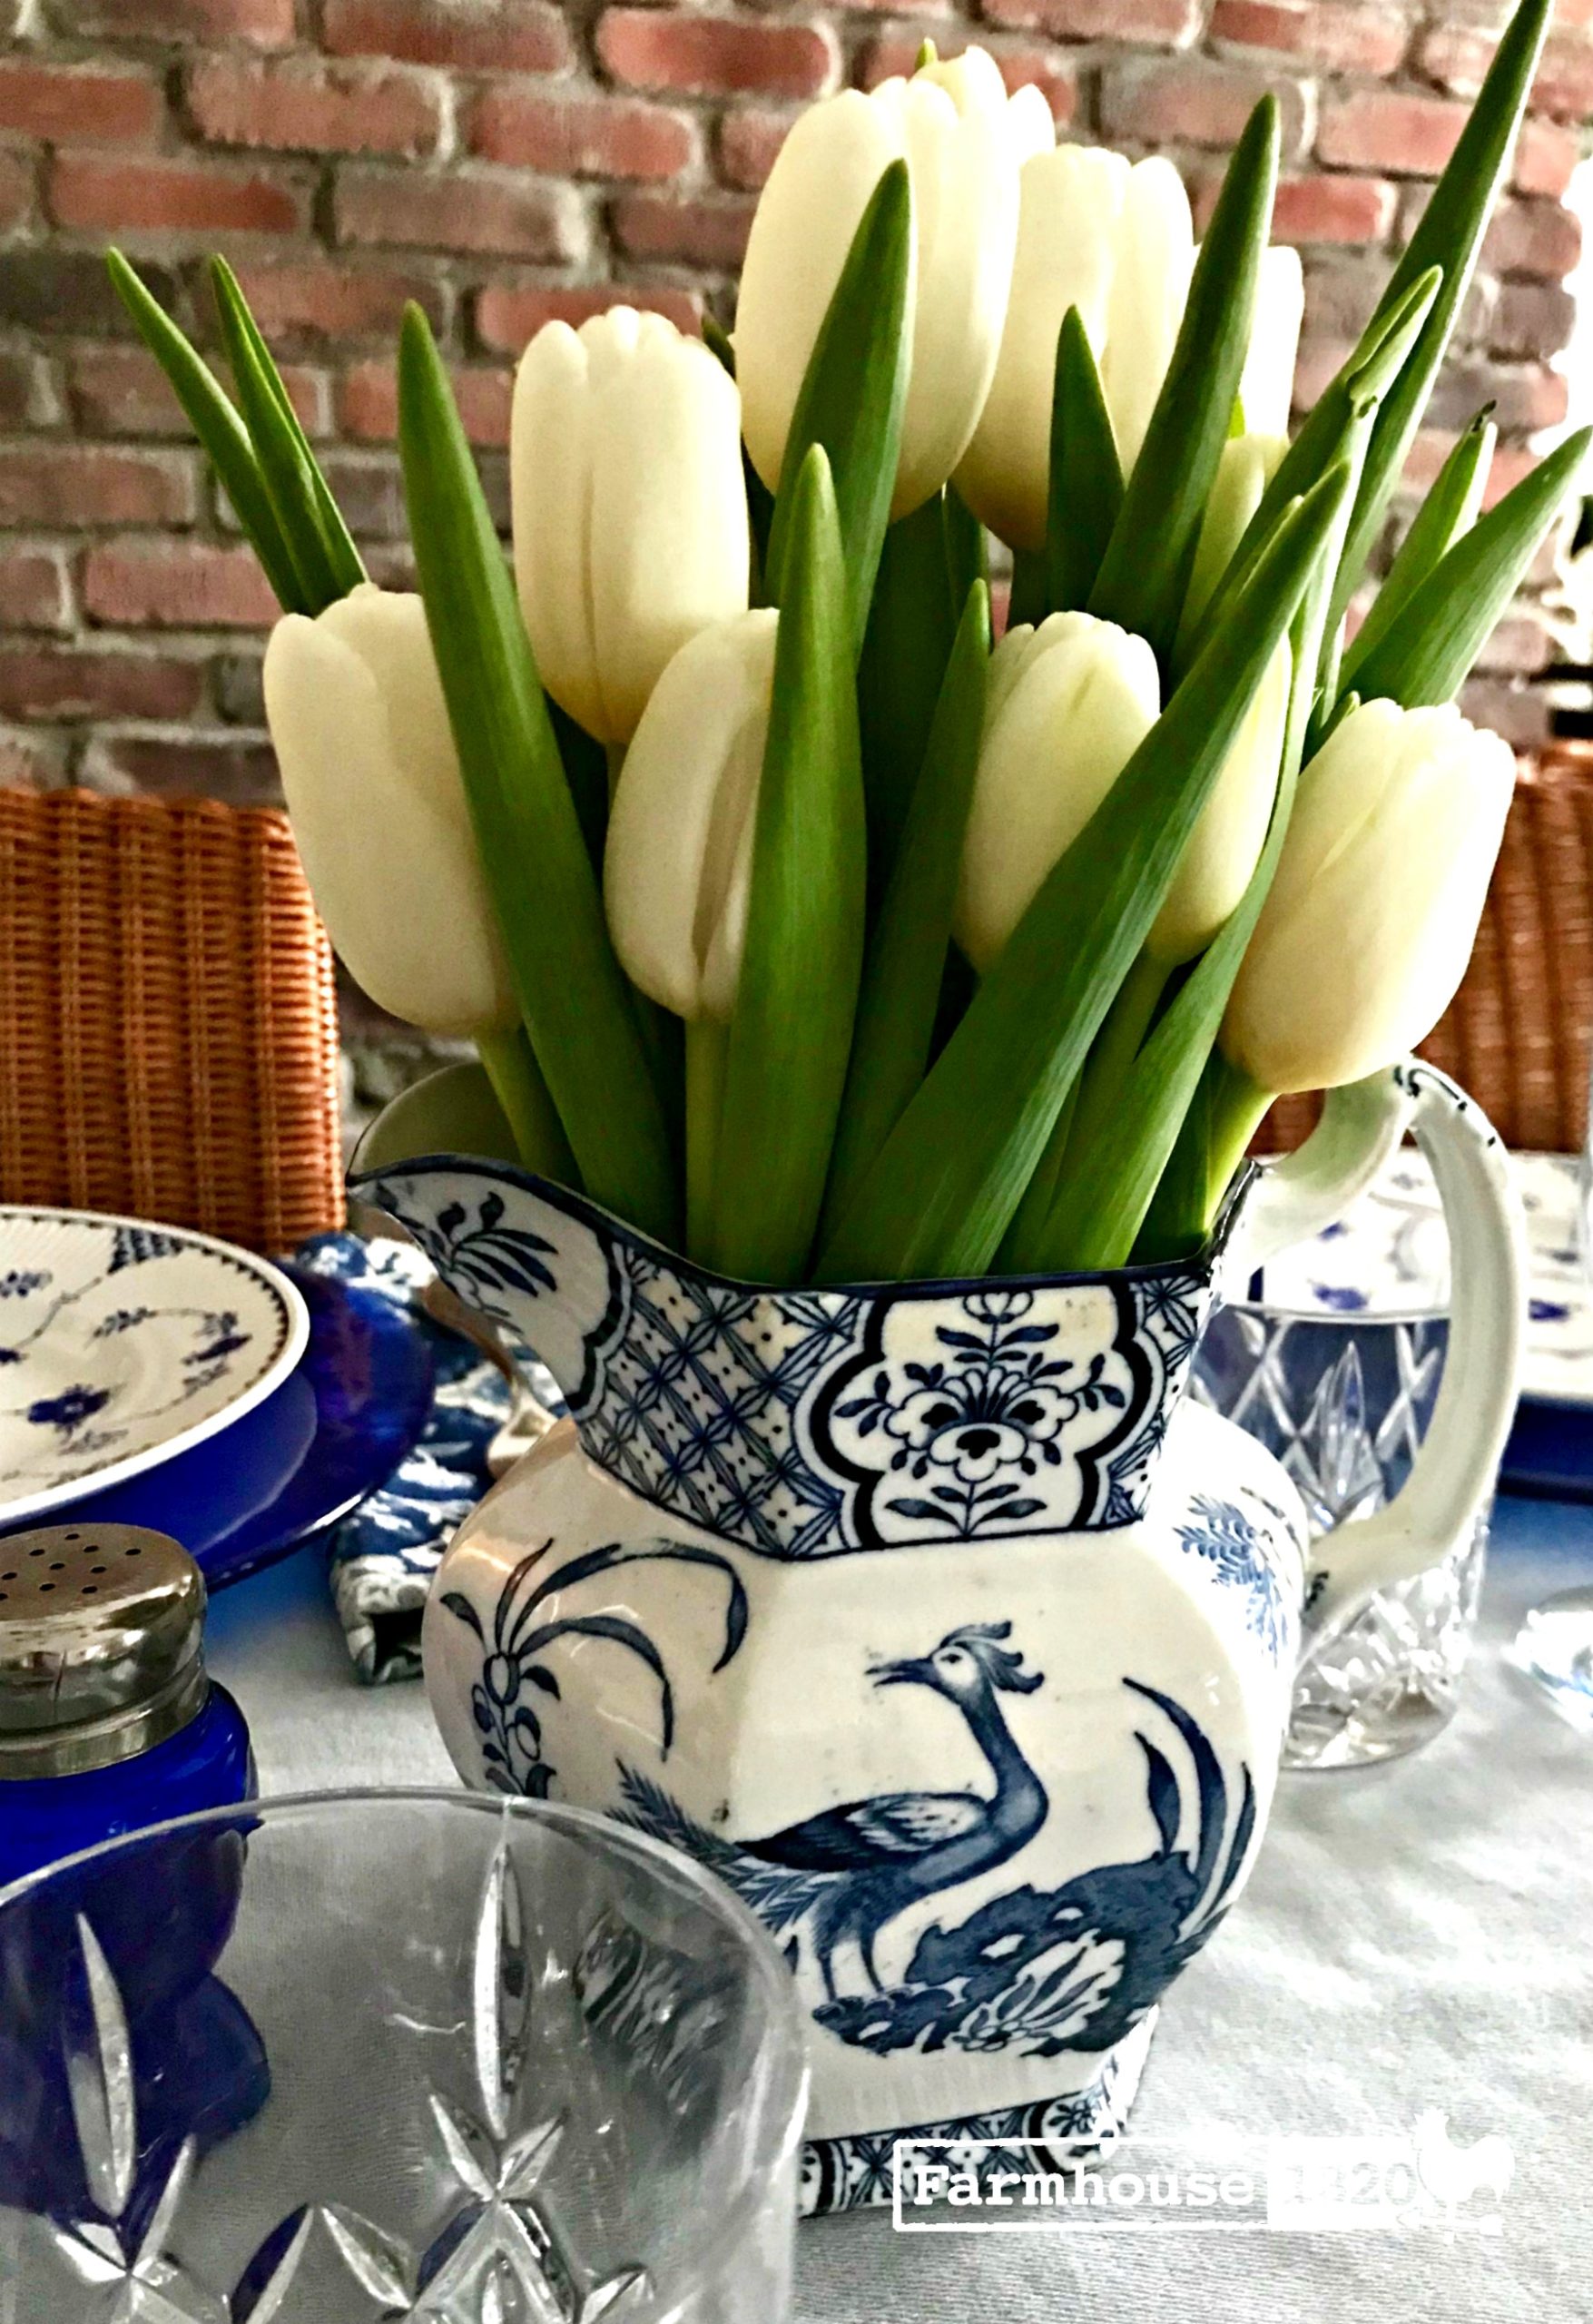 winter blues - bouquet of tulips